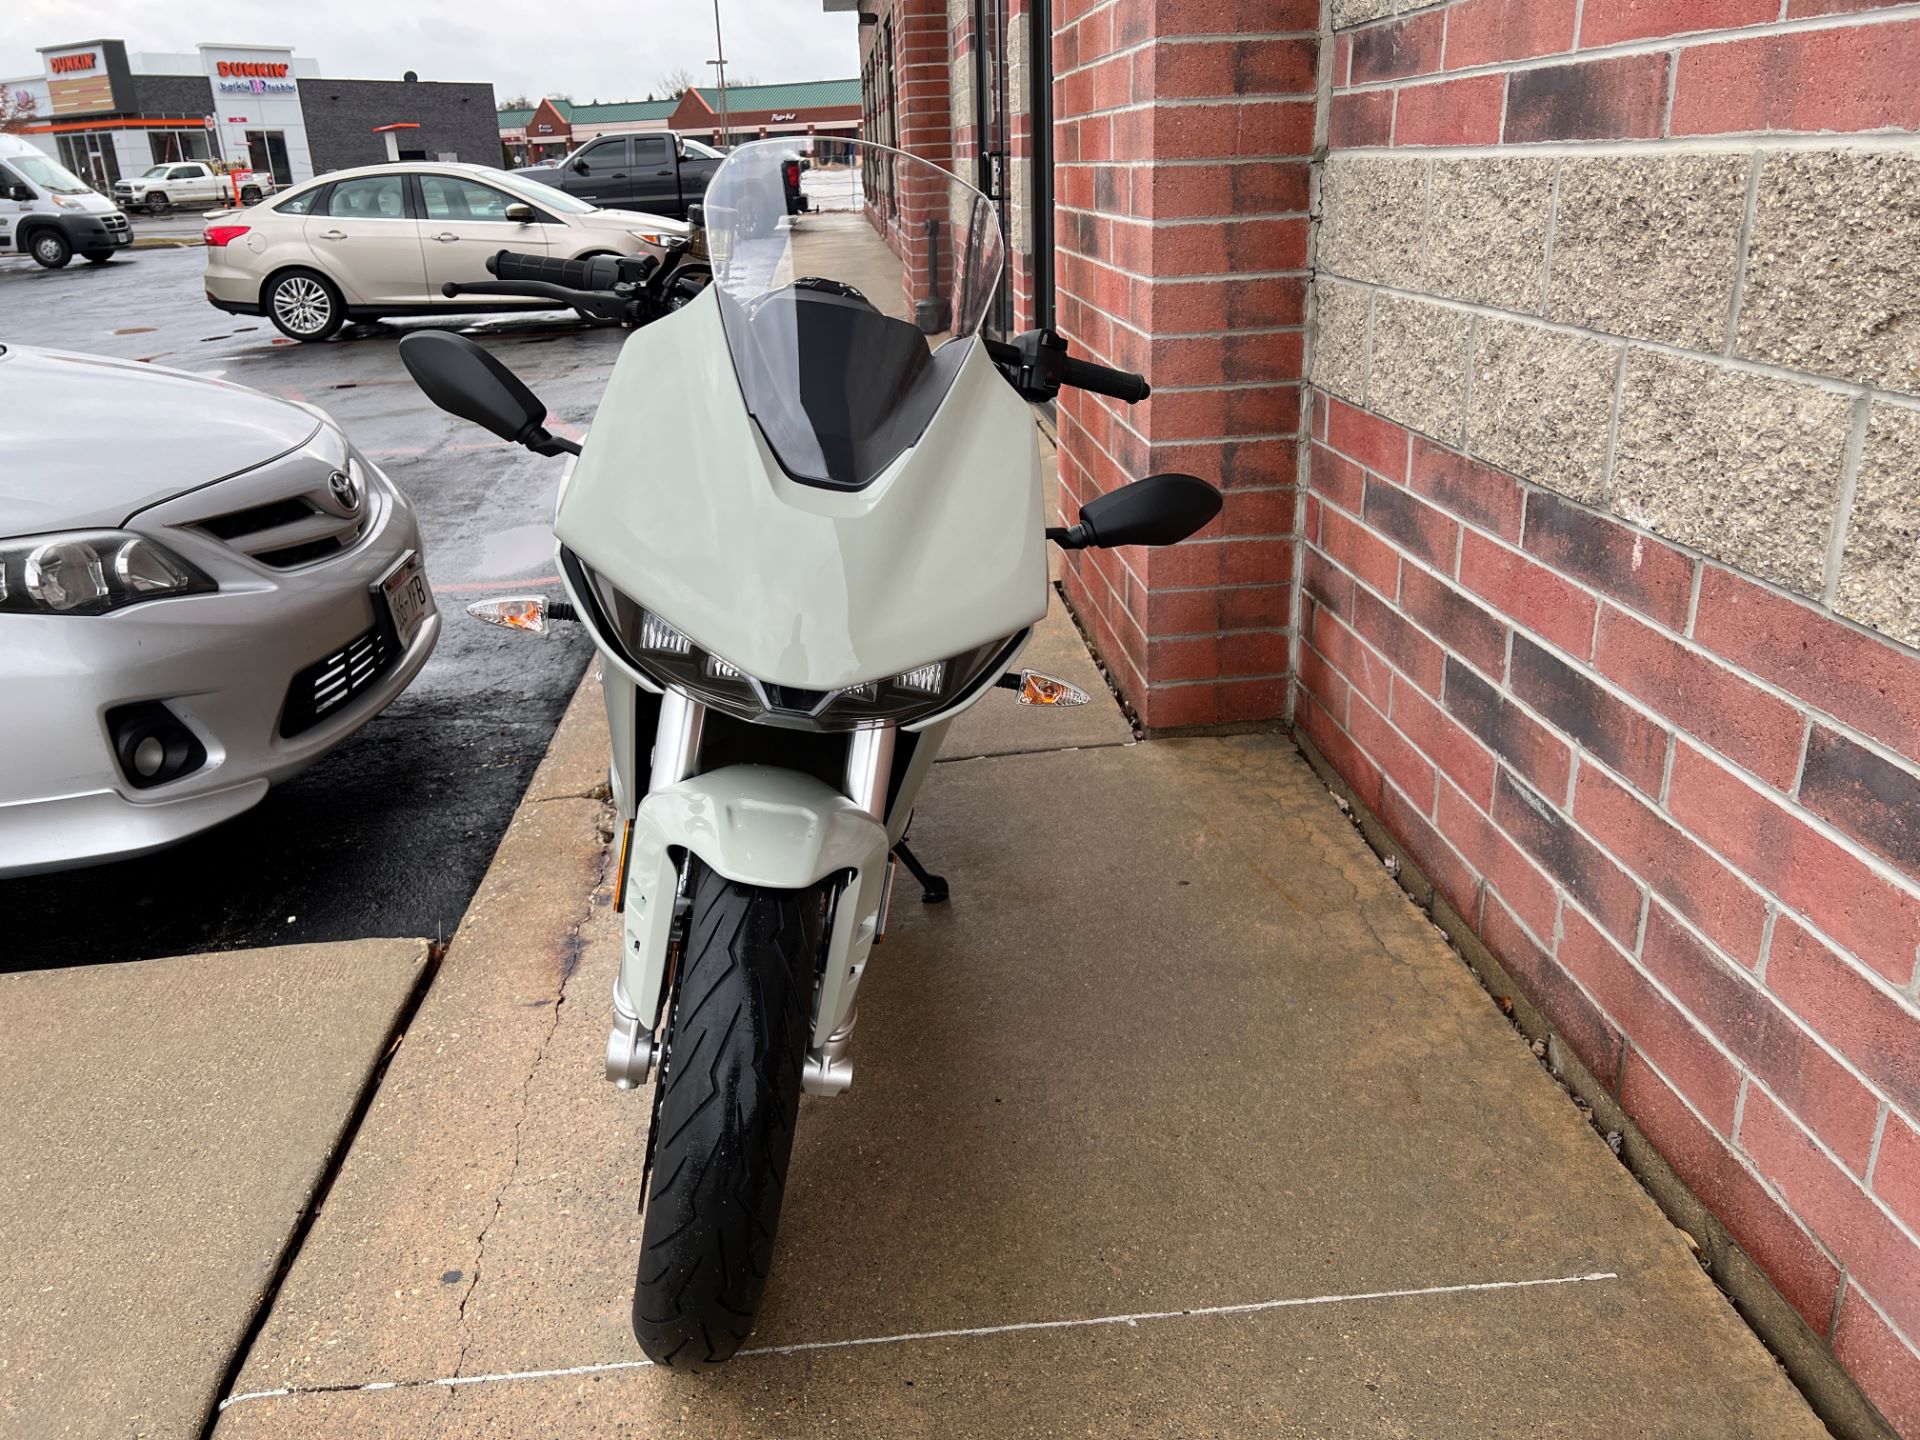 2022 Zero Motorcycles SR/S NA ZF15.6 Premium in Muskego, Wisconsin - Photo 3